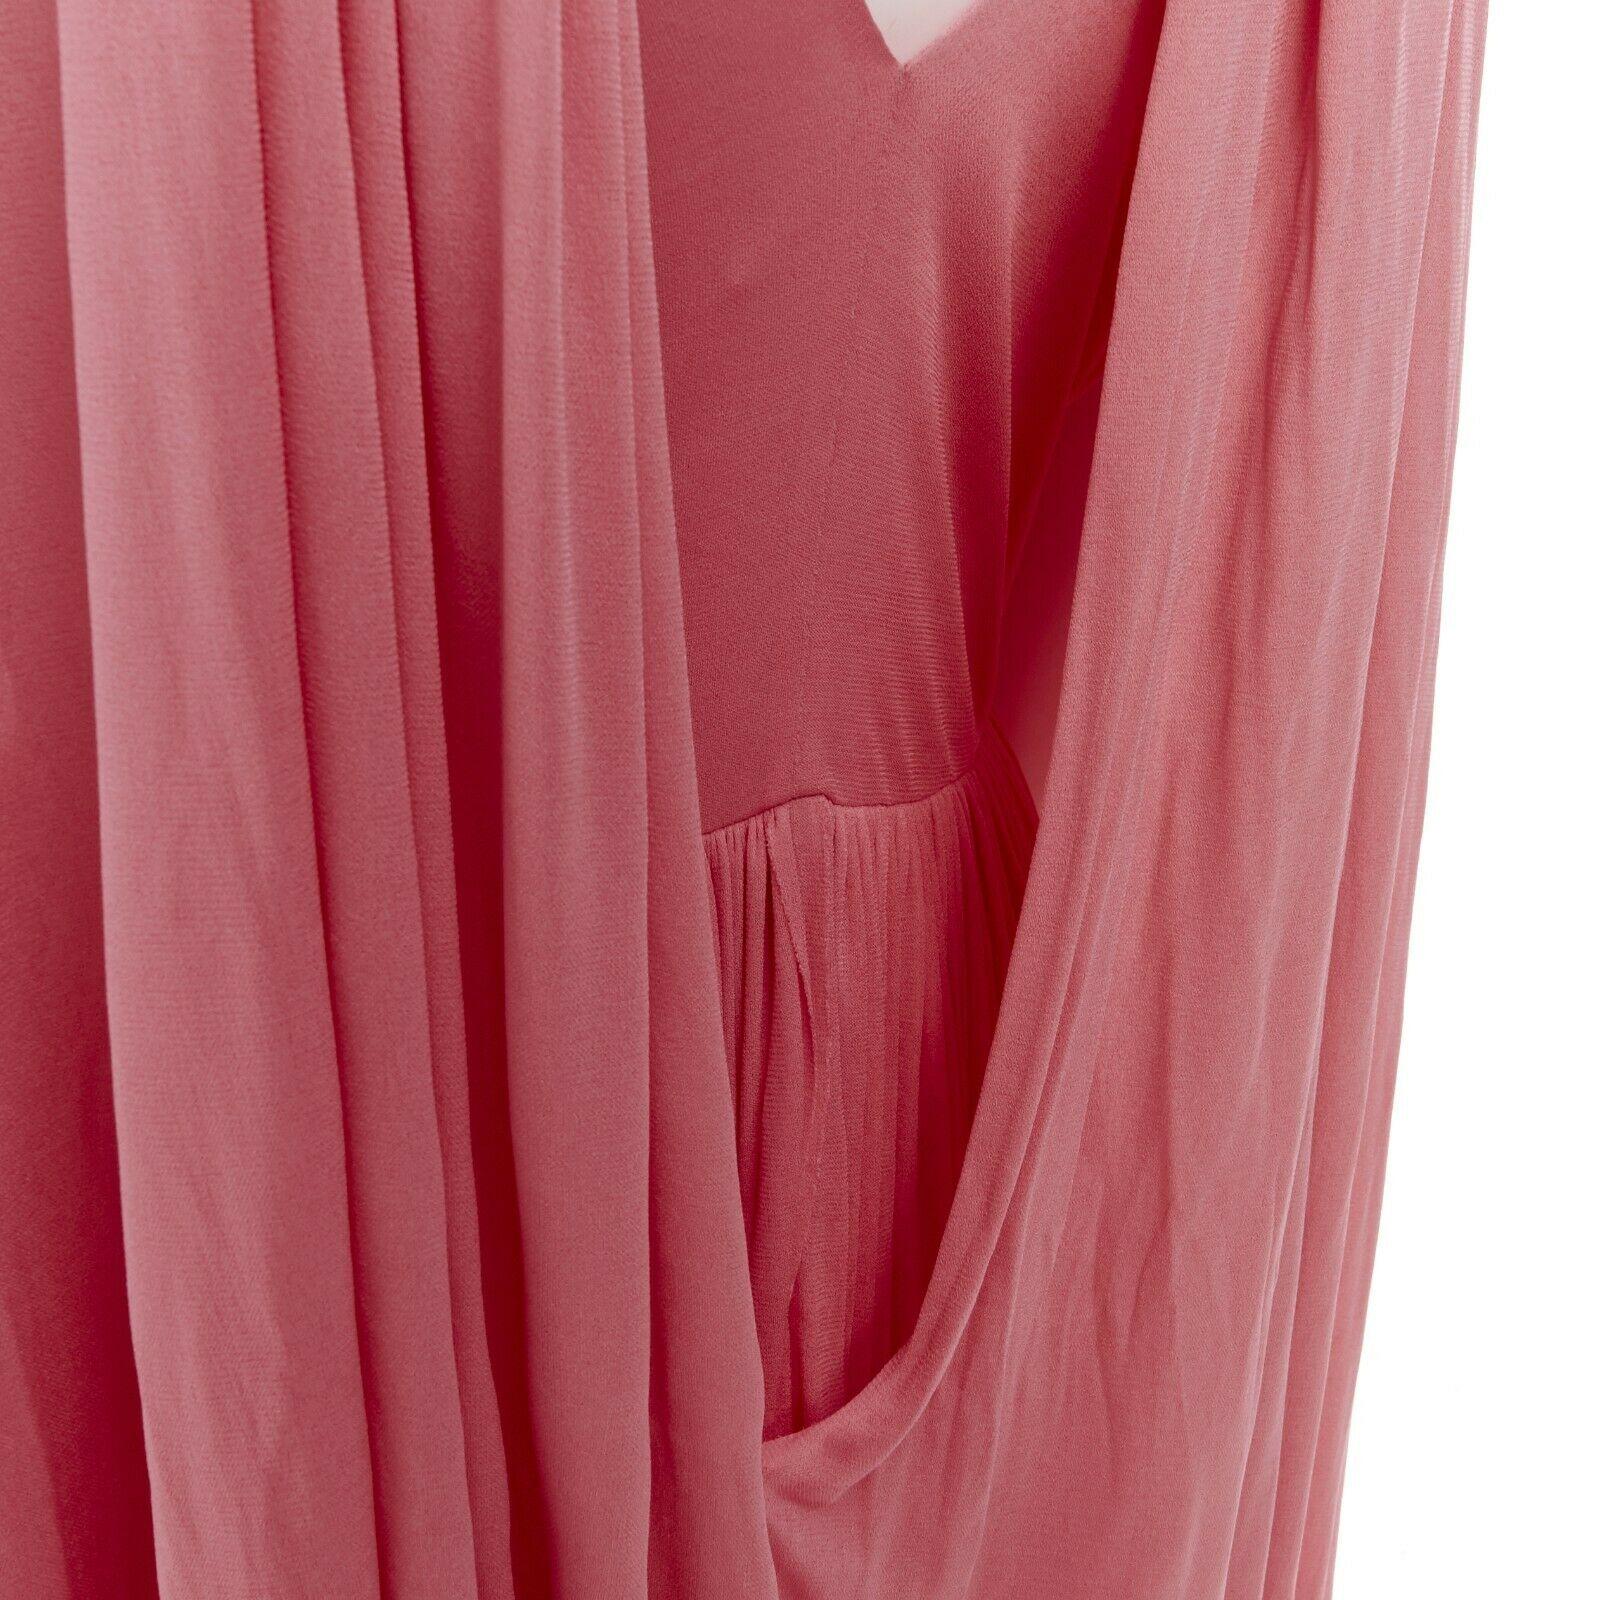 runway CELINE PHOEBE PHILO pink fluid viscose draped cape midi dress FR36 S 3